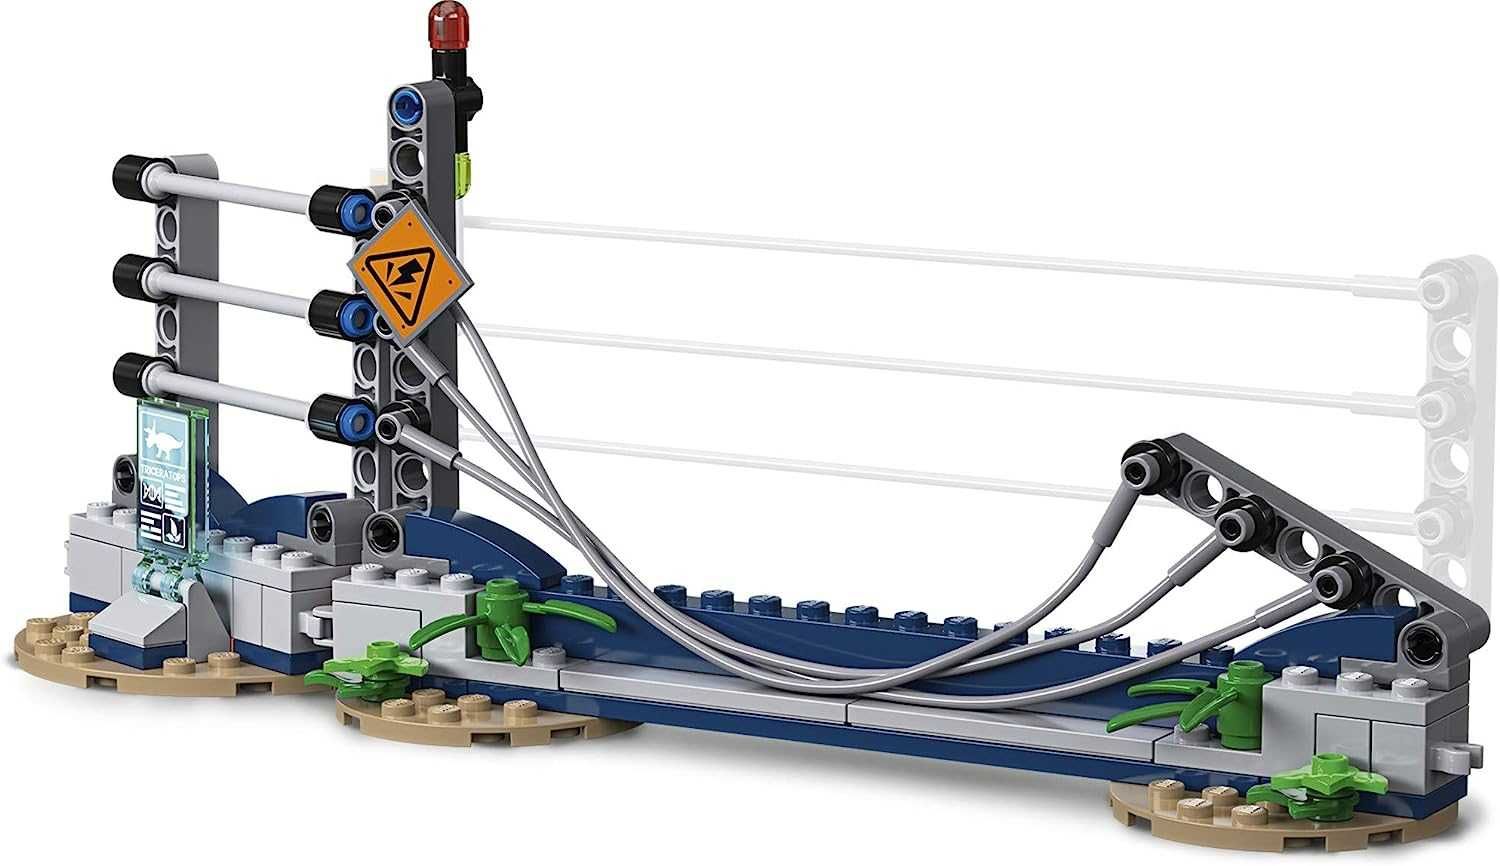 Конструктор Lego Jurassic World Напад трицератопса 75937